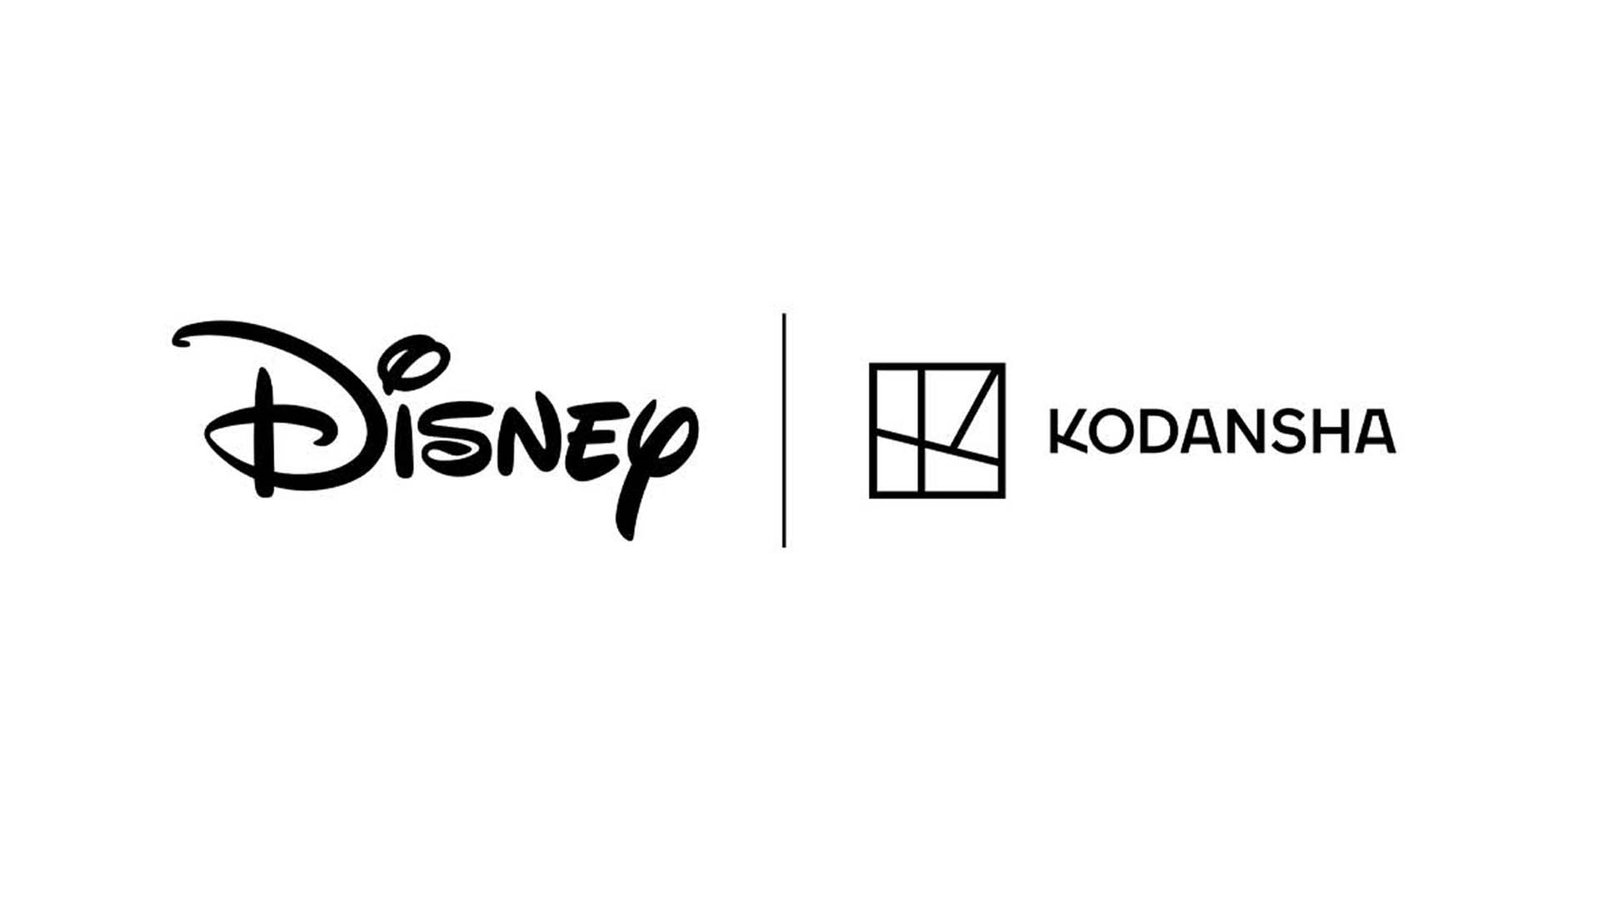 Disney-Kodansha strategic partnership